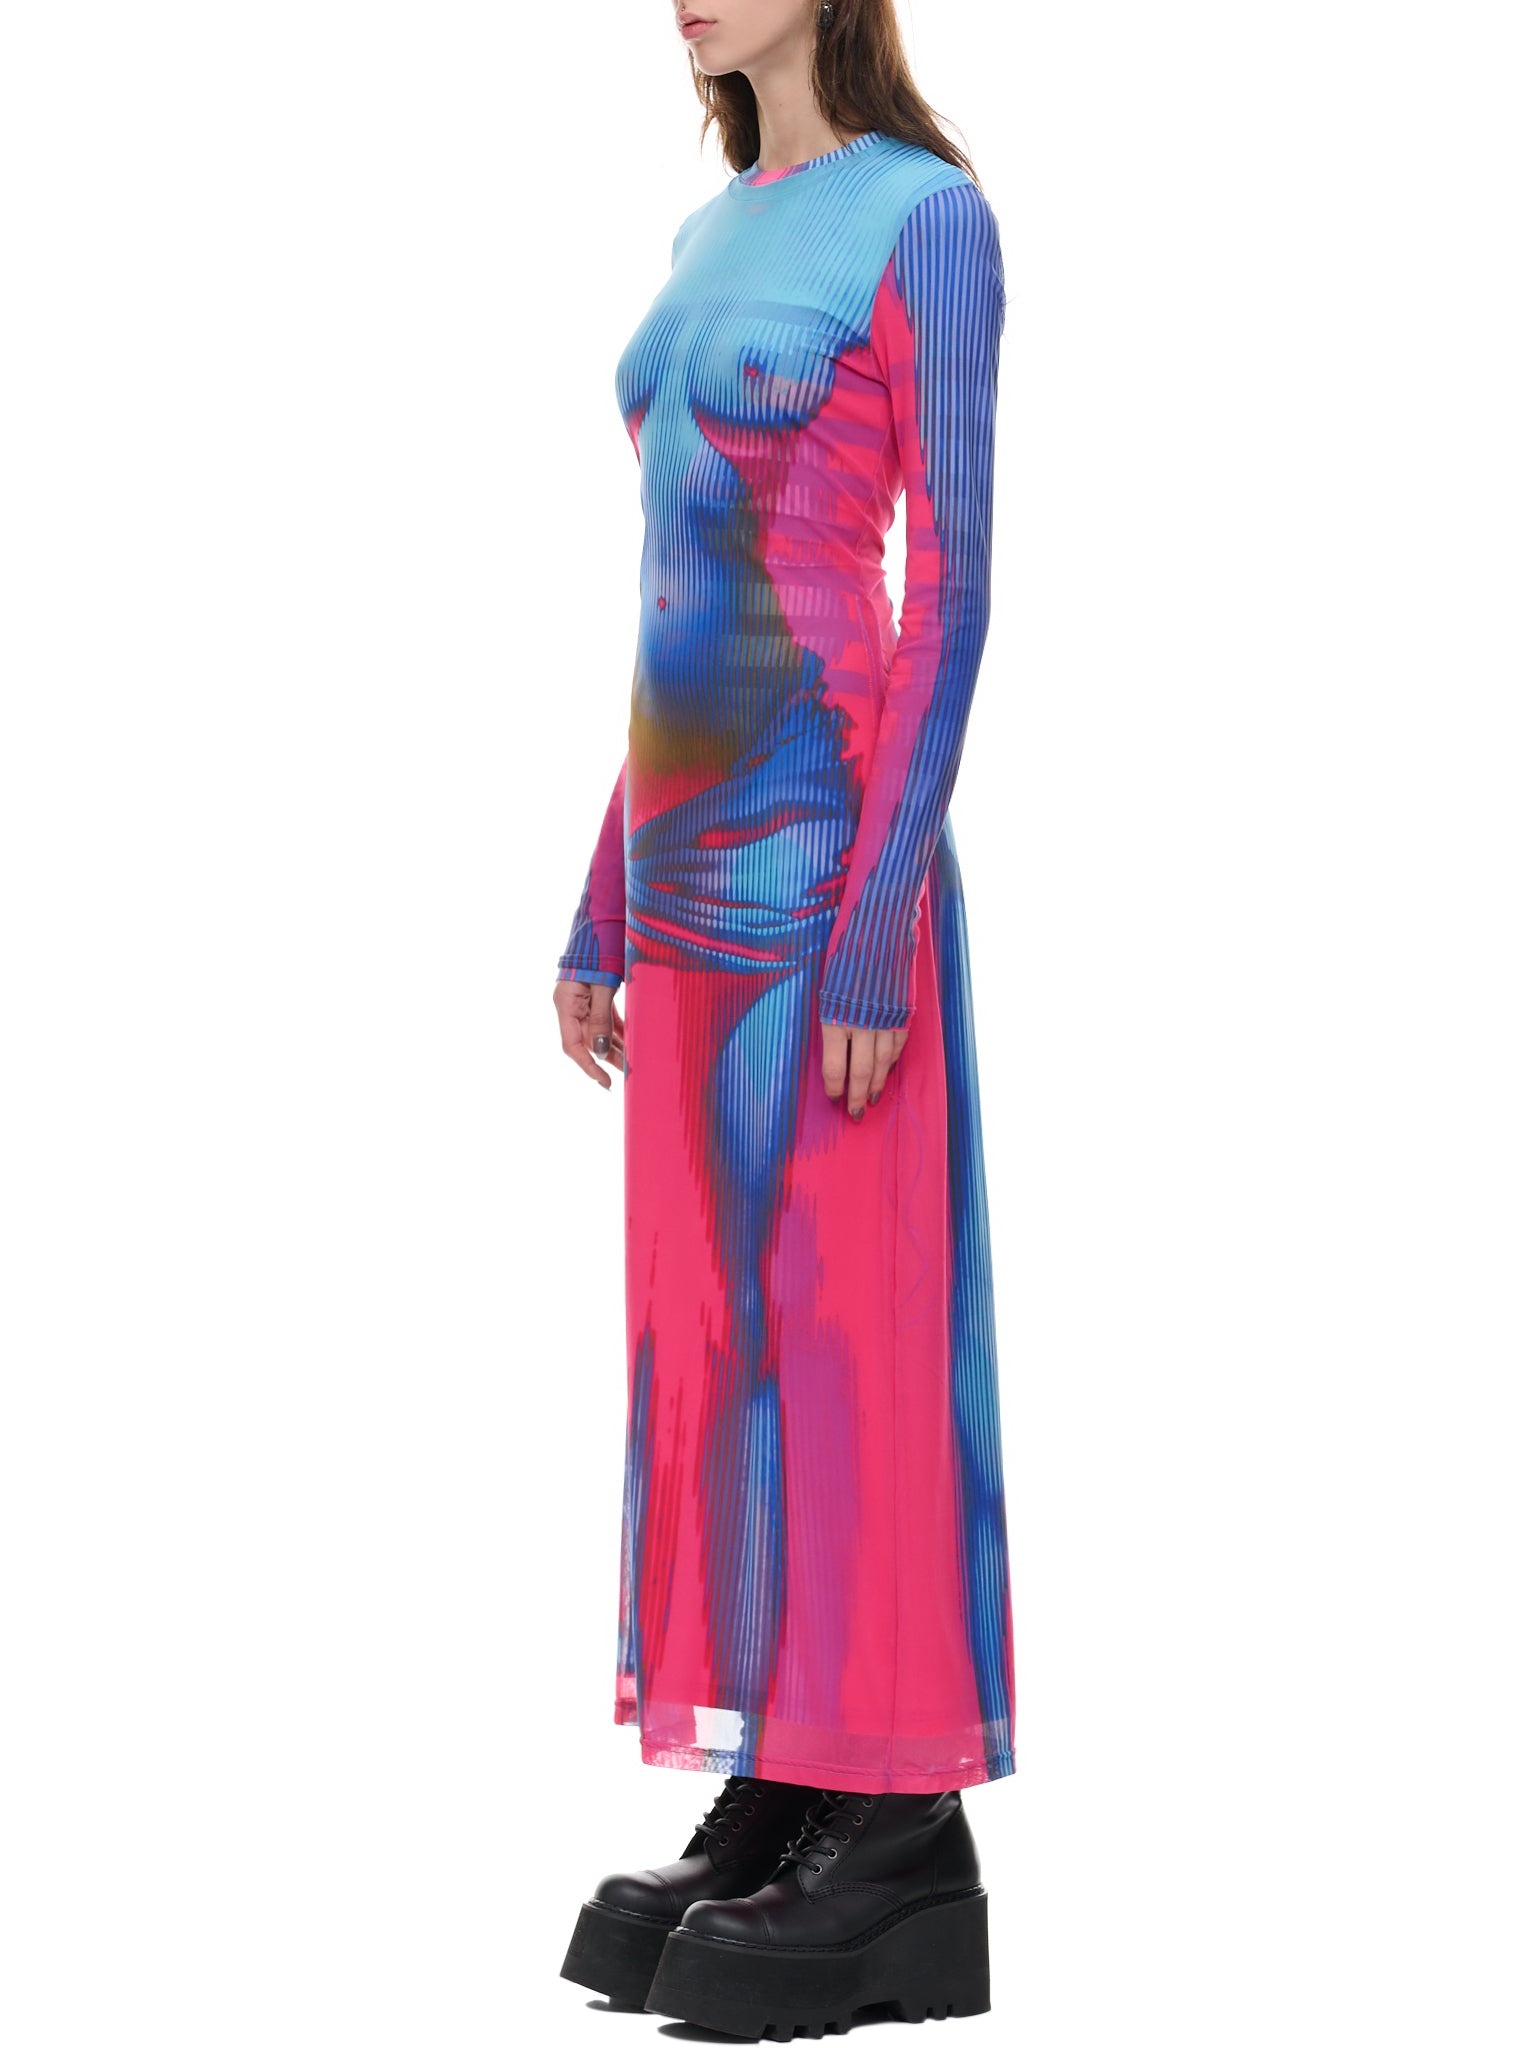 Pink & Blue Body Morph Dress - 2